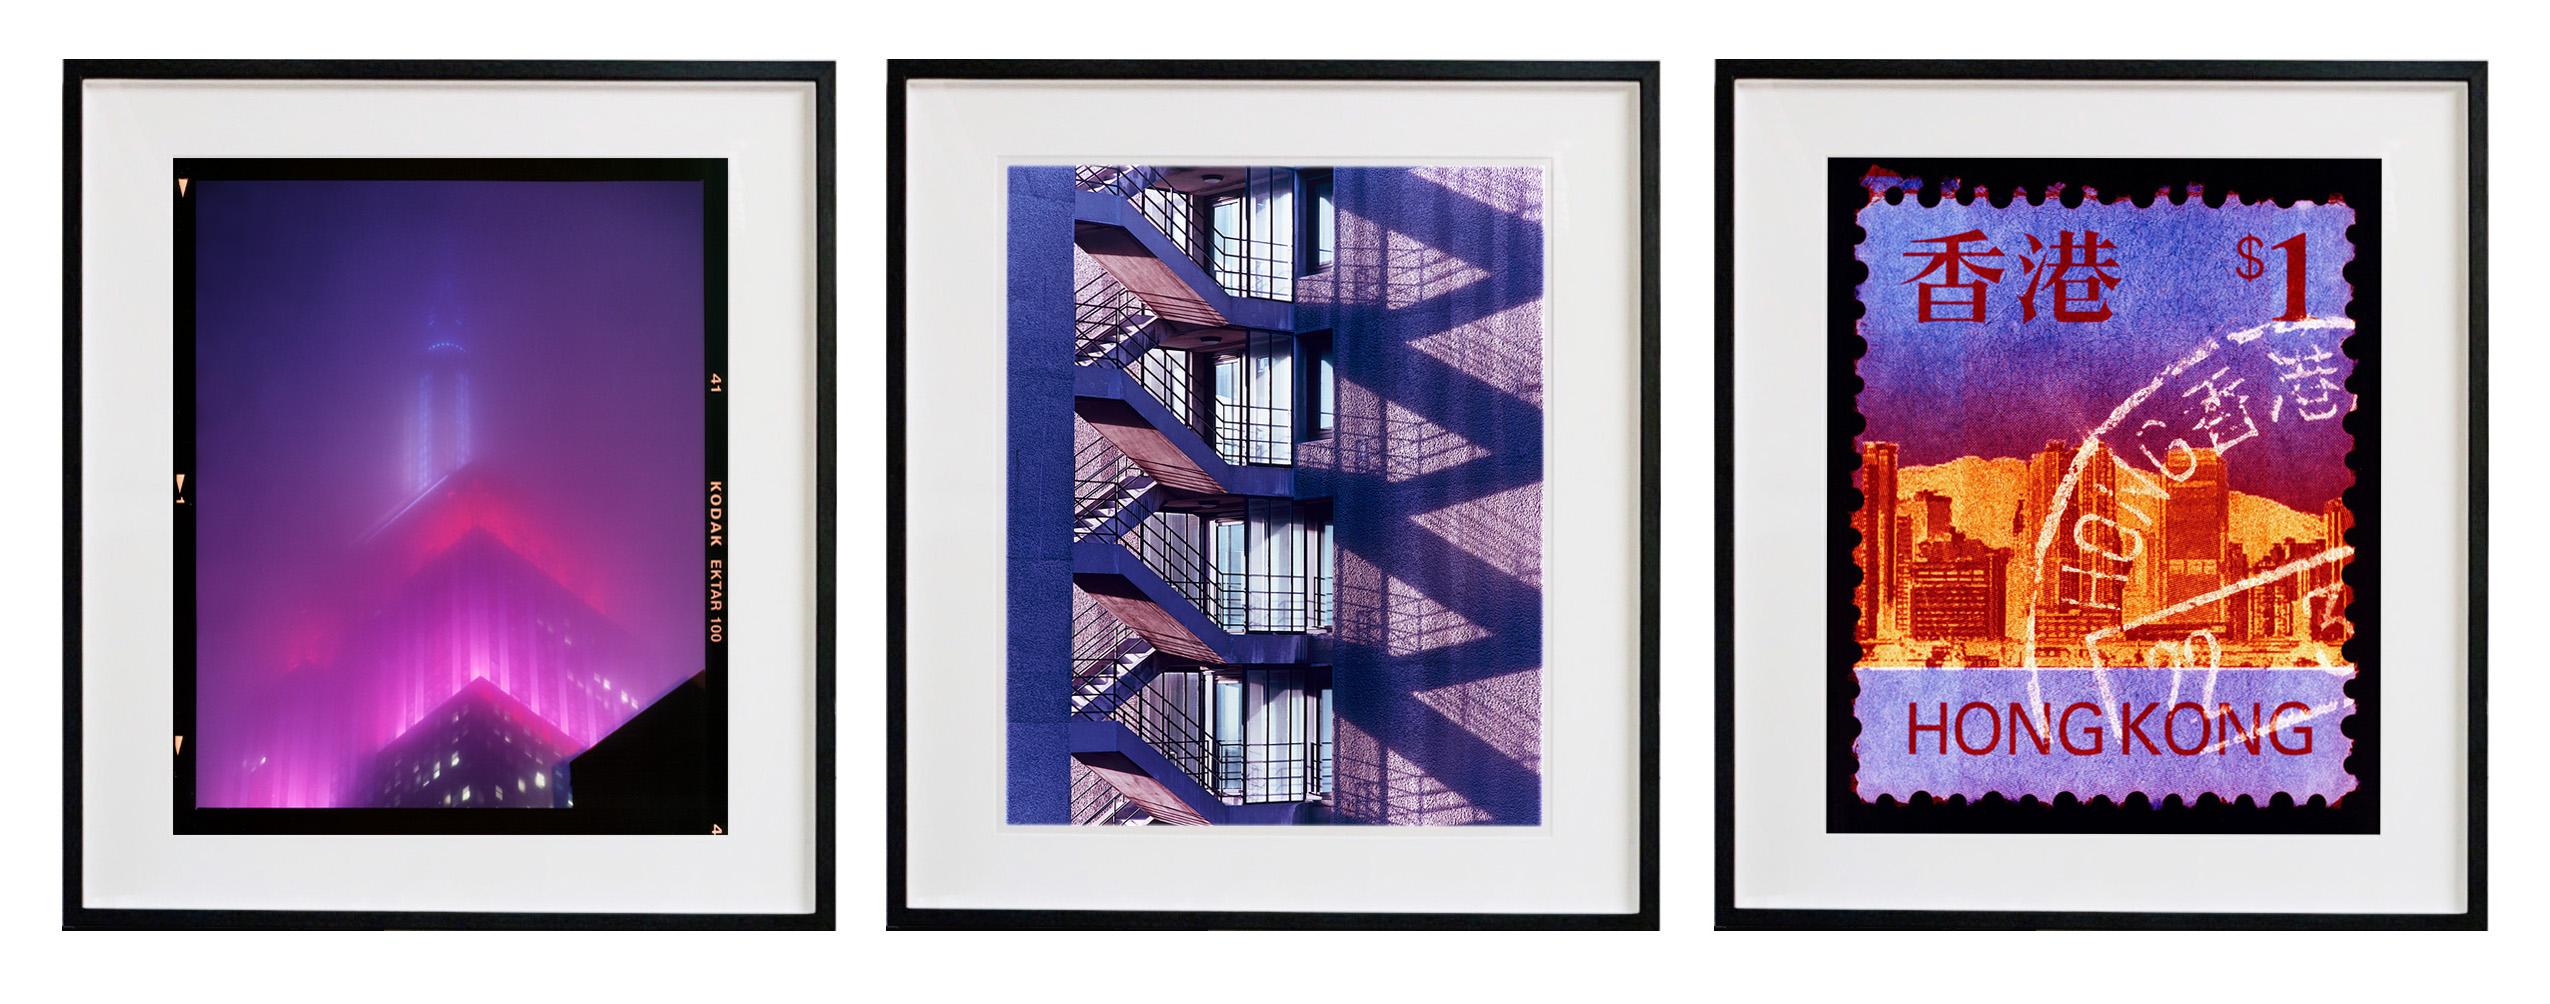 Richard Heeps Print - New York, London, Hong Kong Set of Three Framed Purple Photographic Artworks